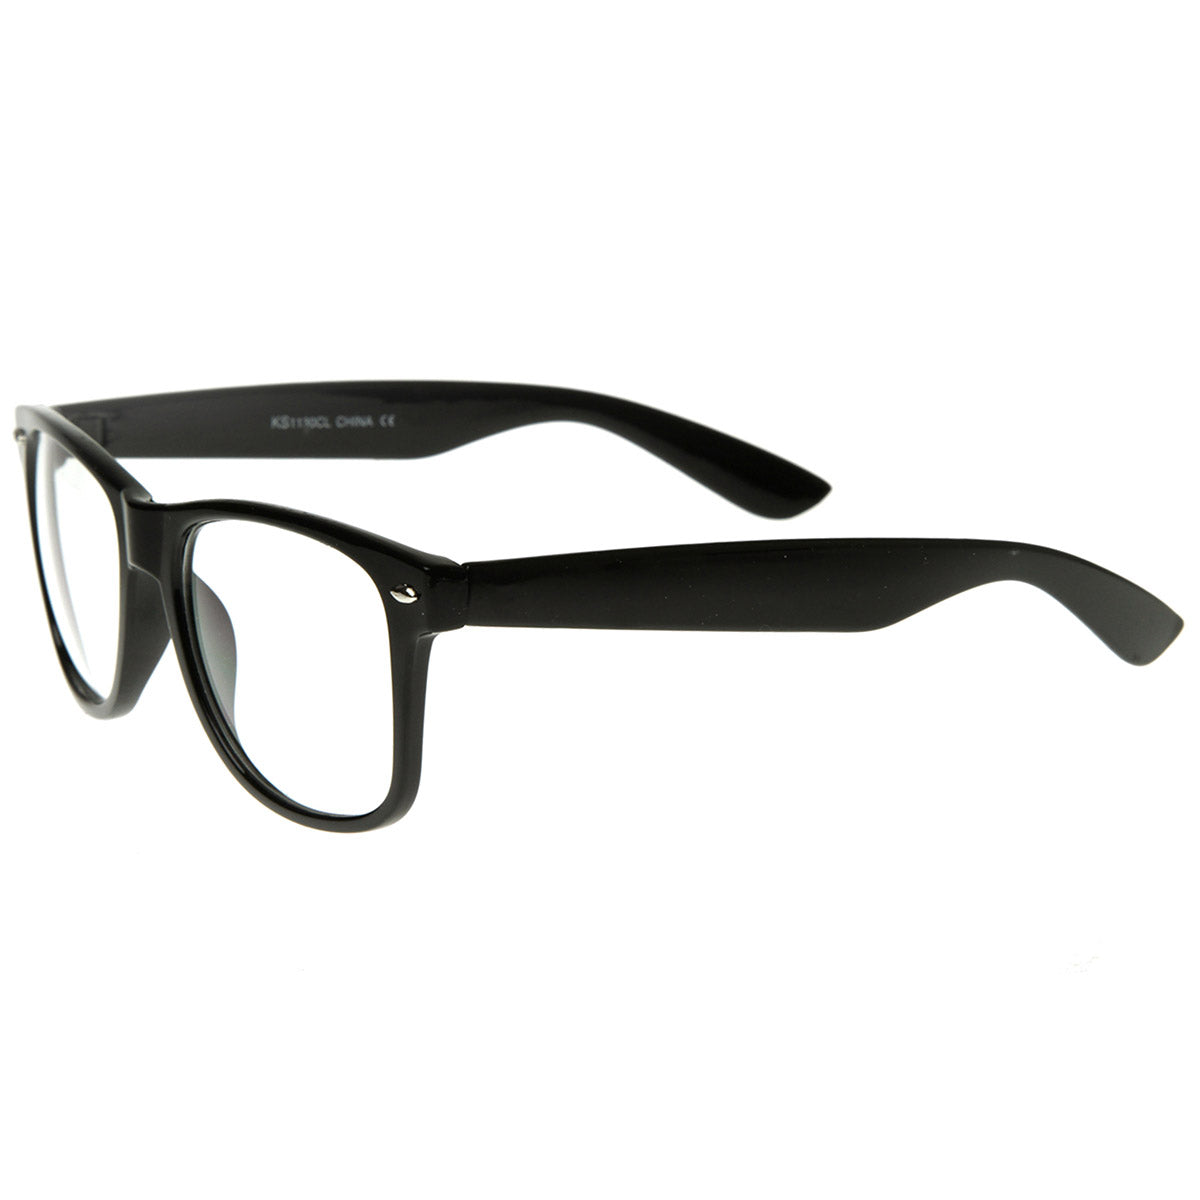 Vintage Sunglasses Frame Retro Clear Glasses Tinted Lens Fashion Men